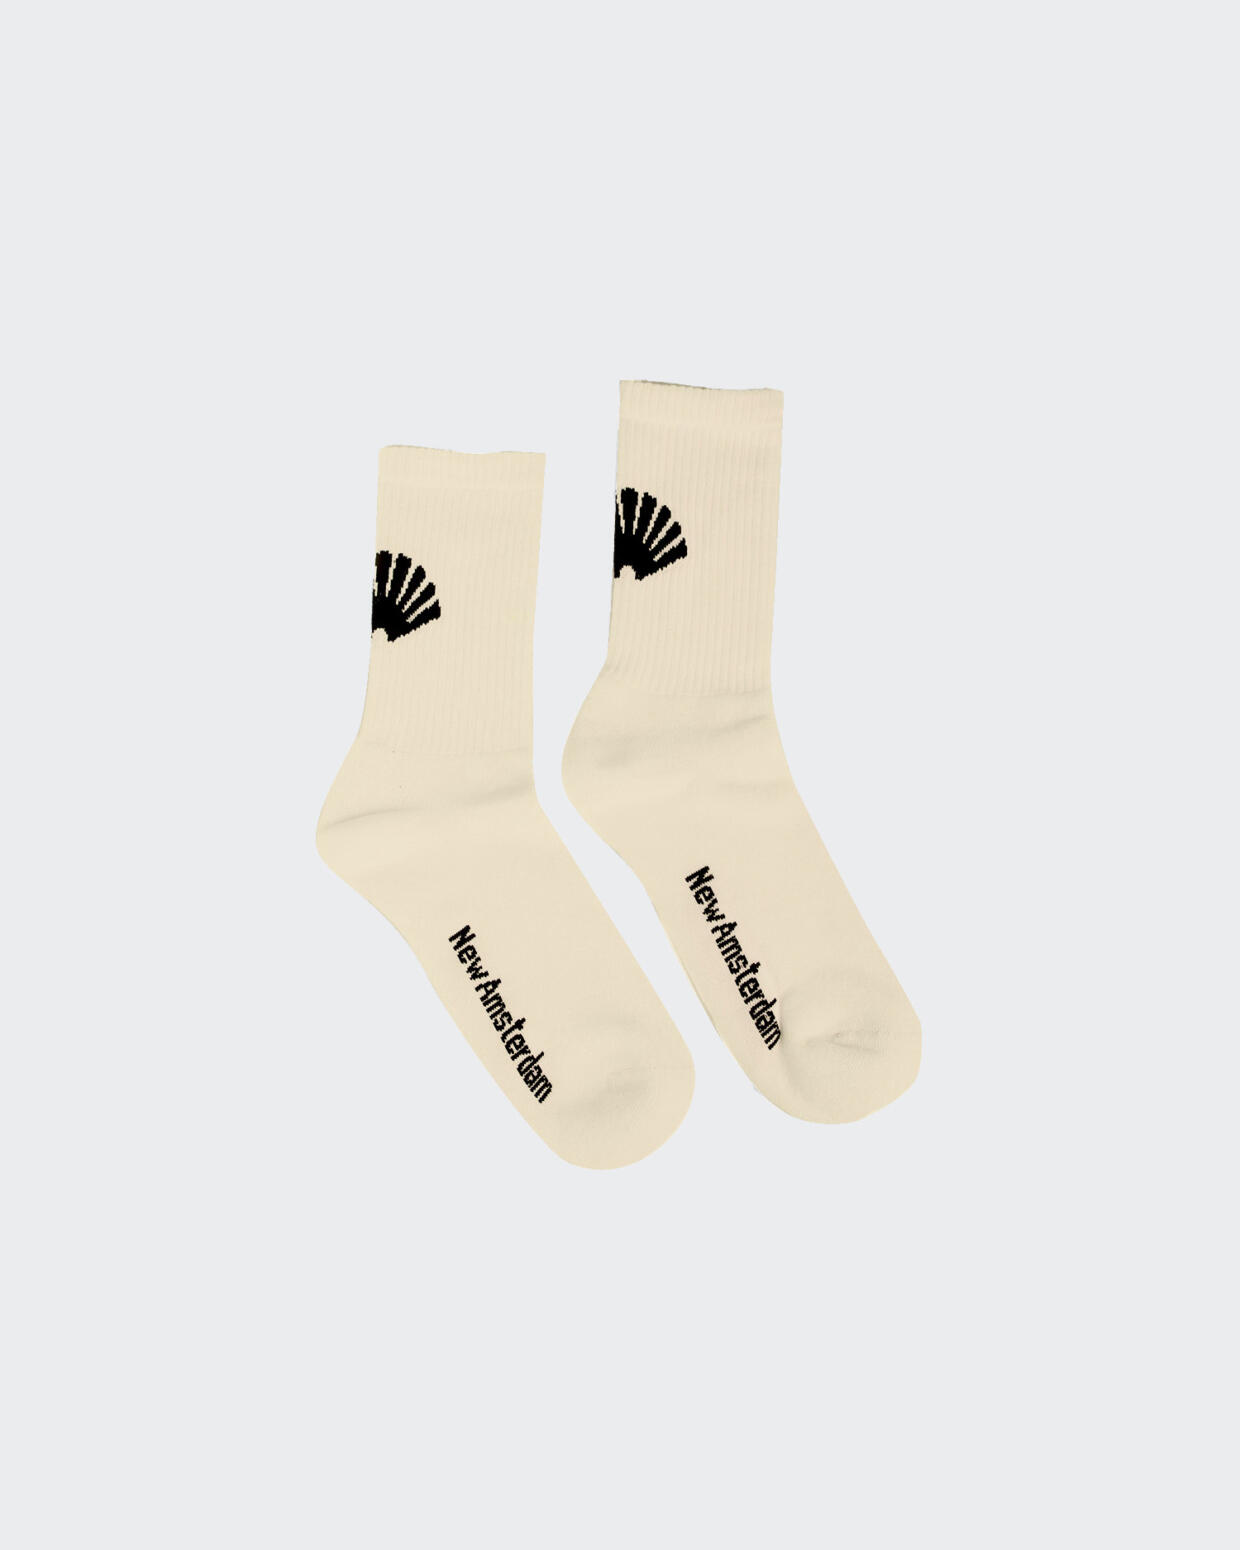 New Amsterdam Surf Association Logo Socks